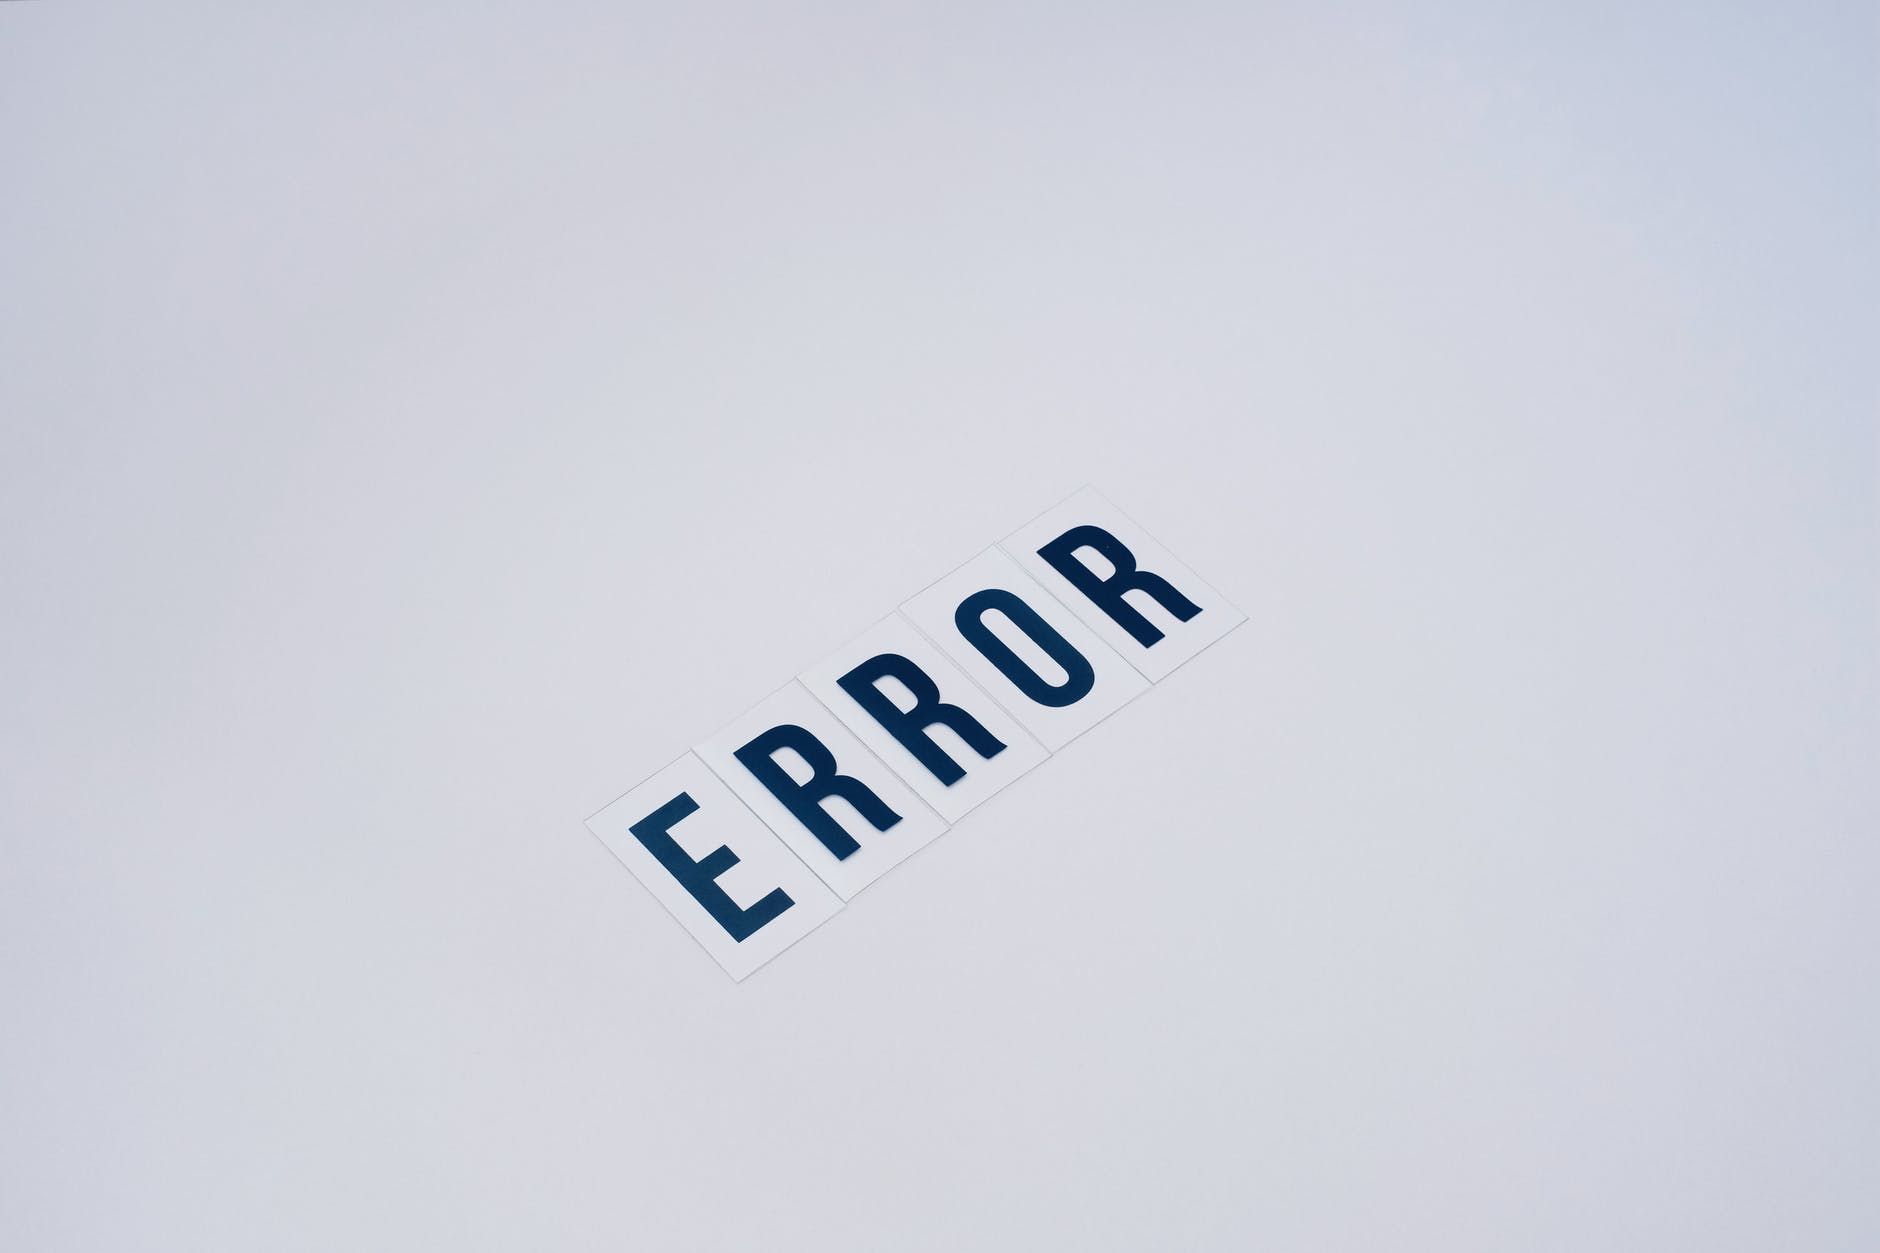 Error message displayed